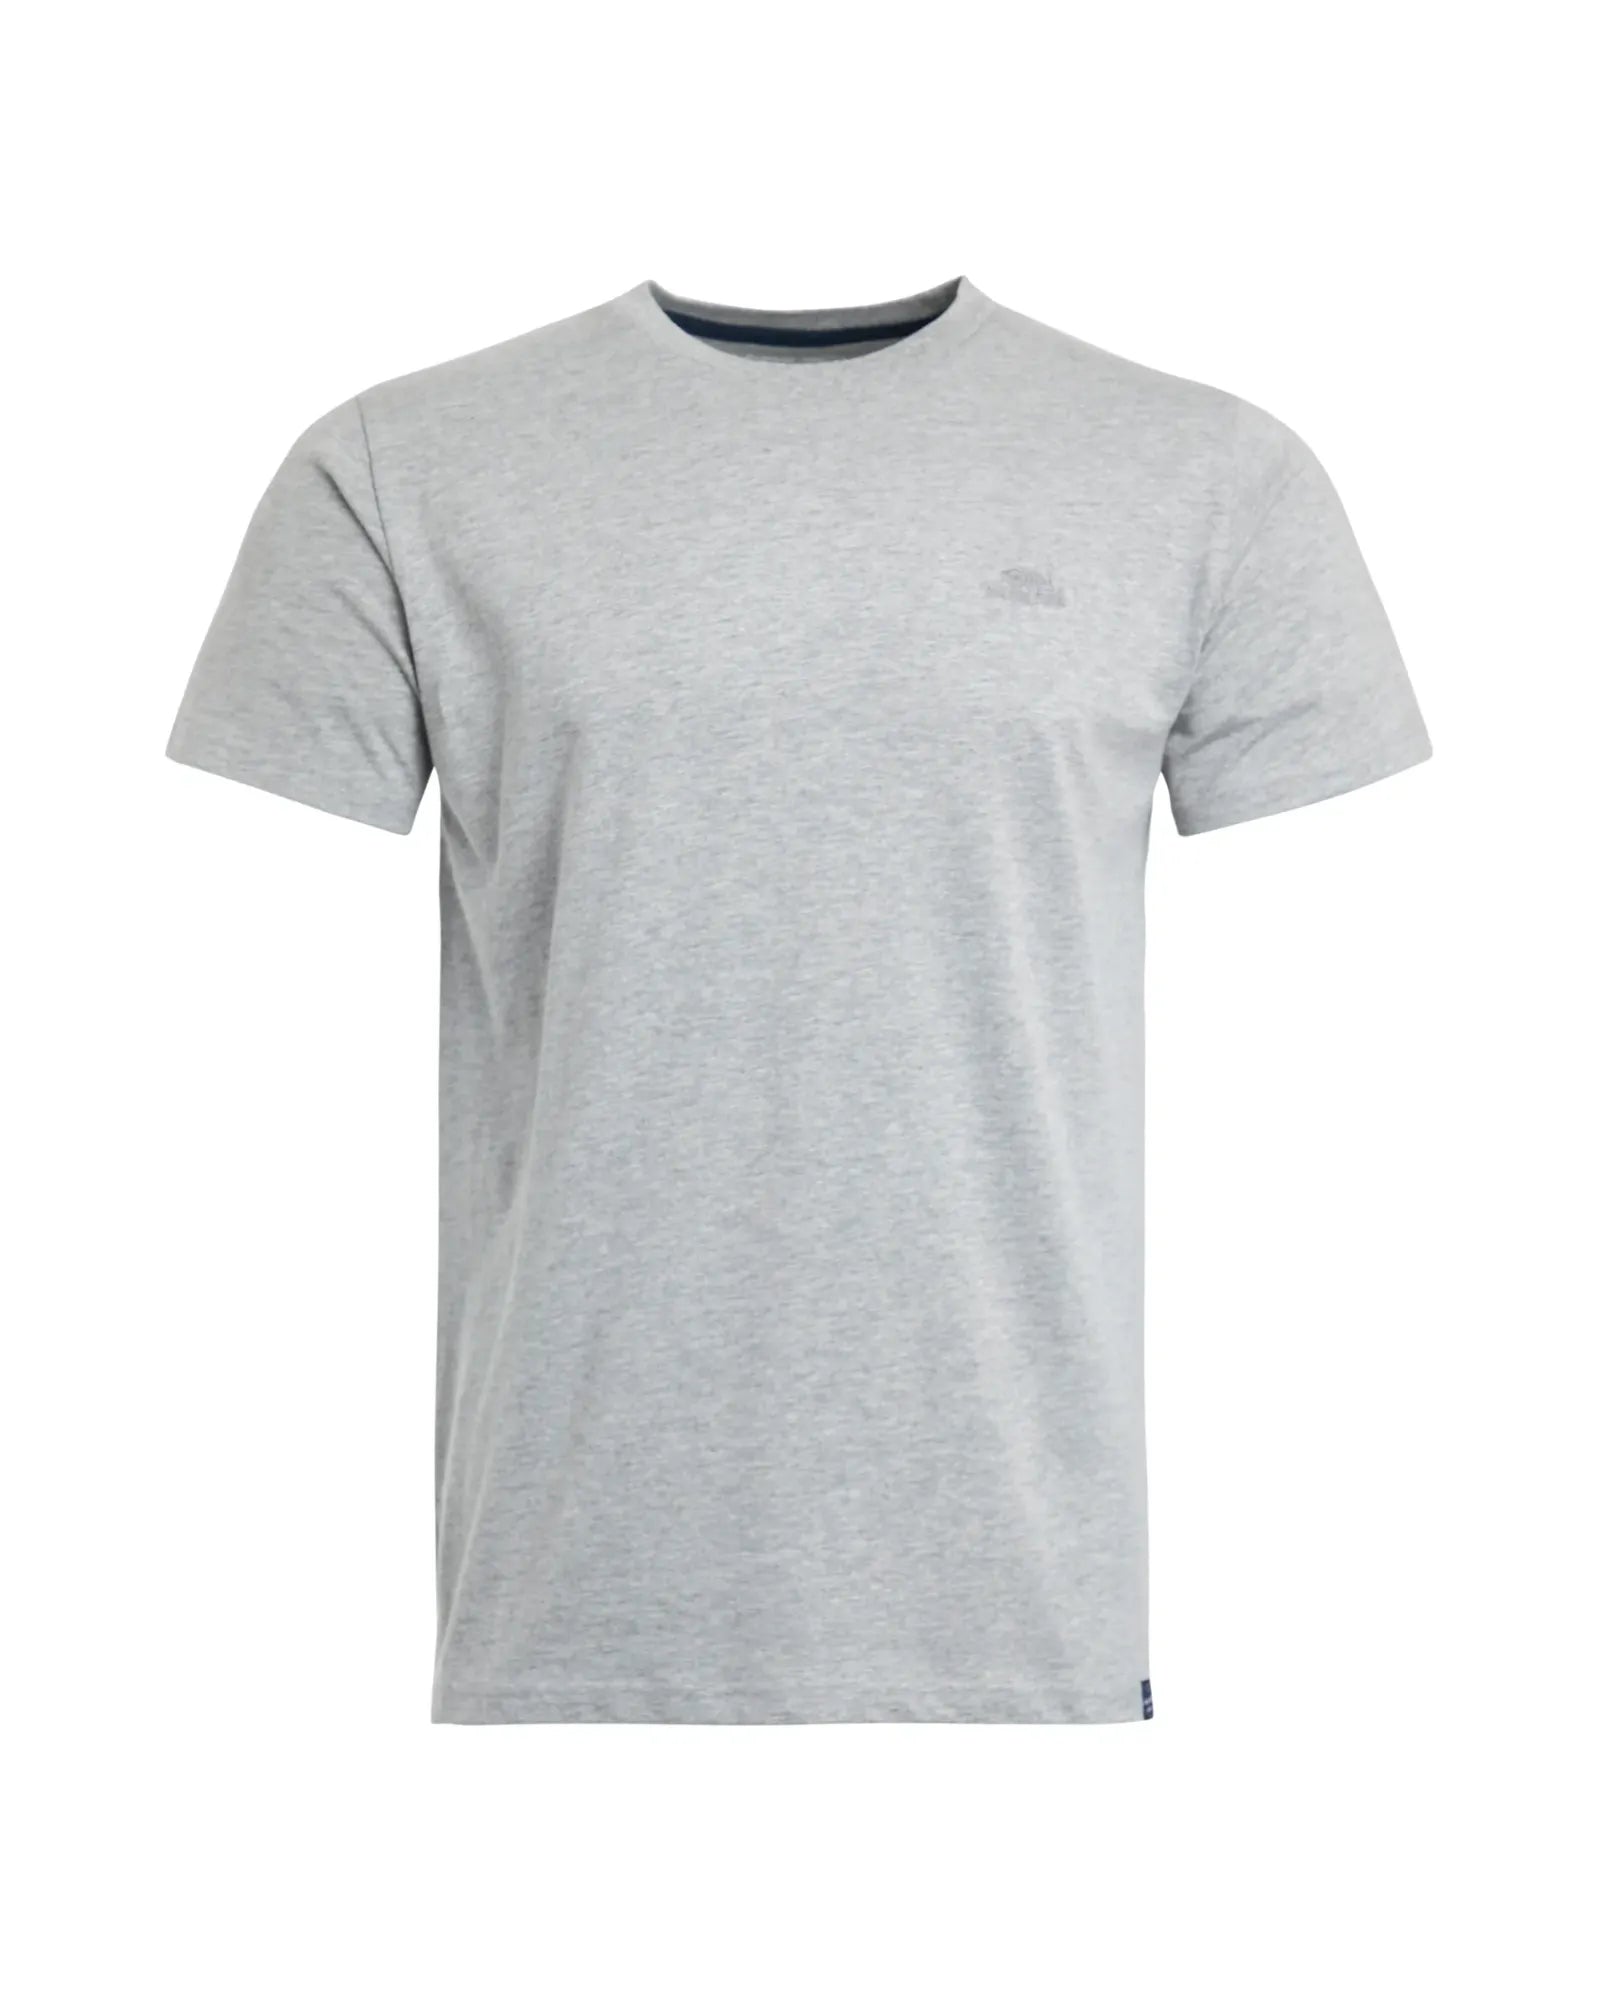 Fished Grey T-shirt